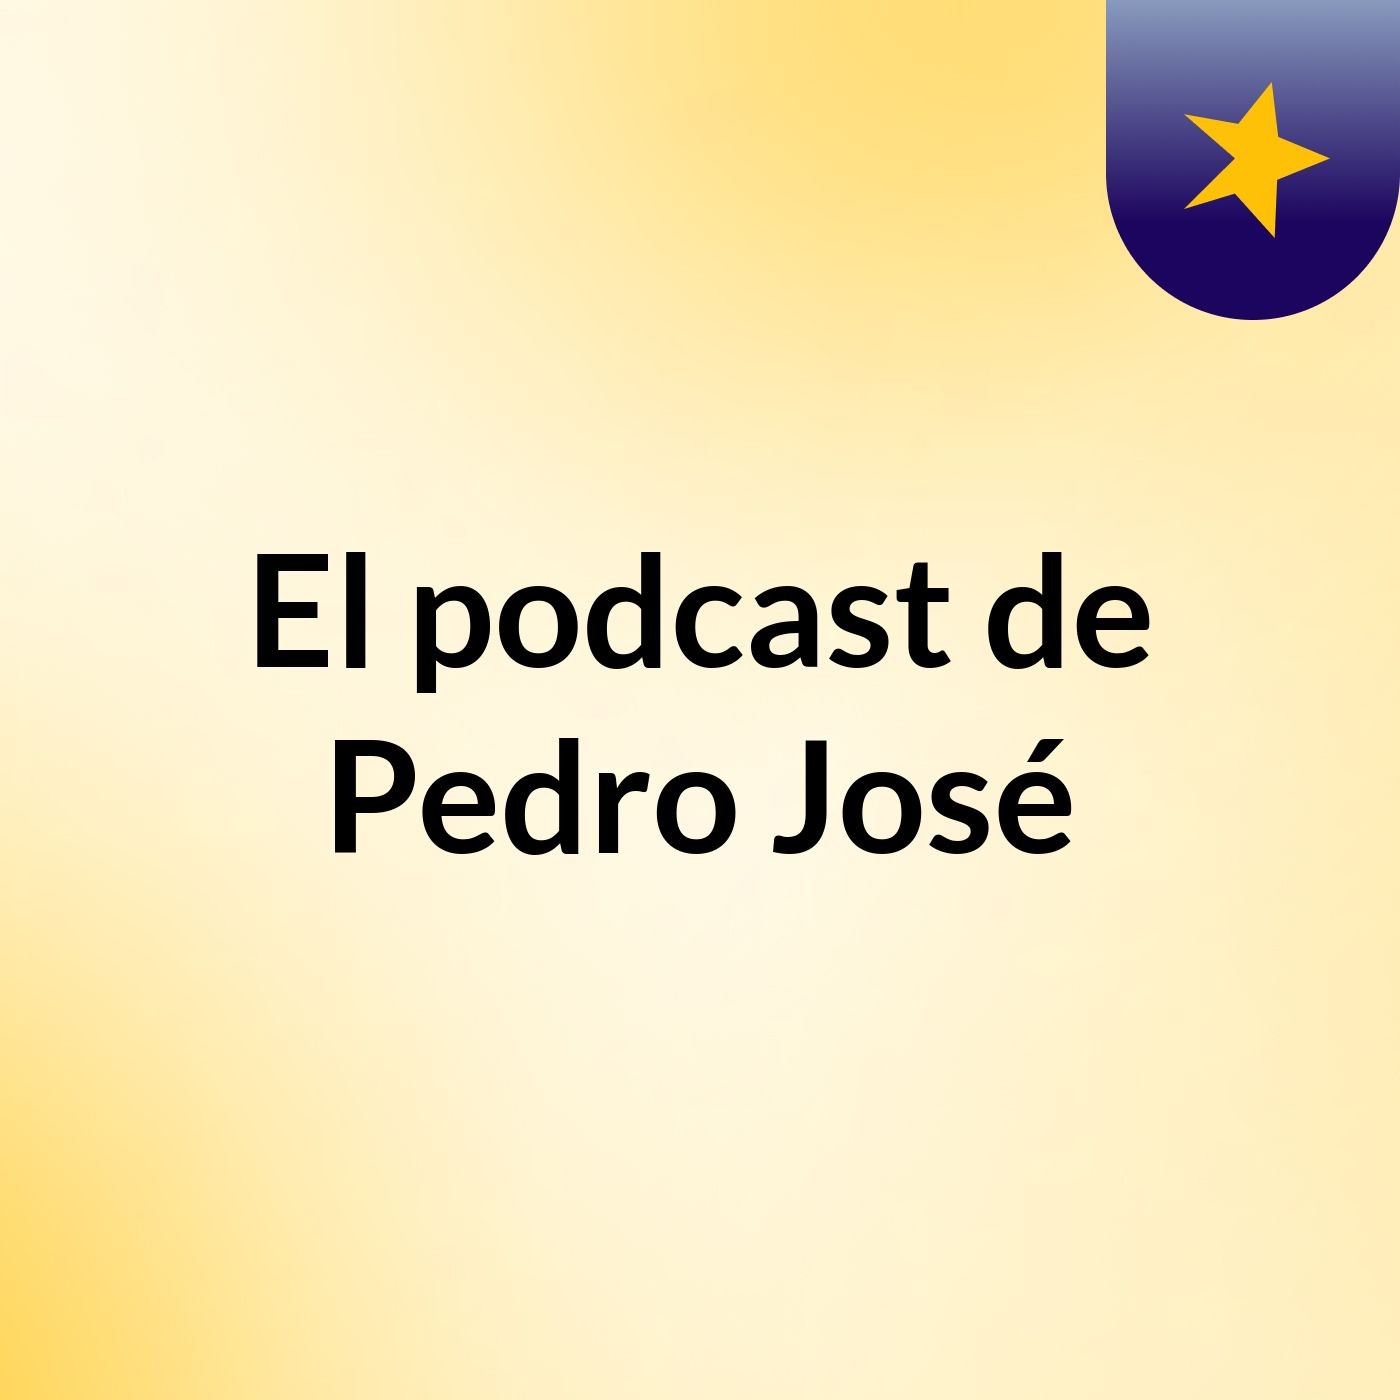 El podcast de Pedro José